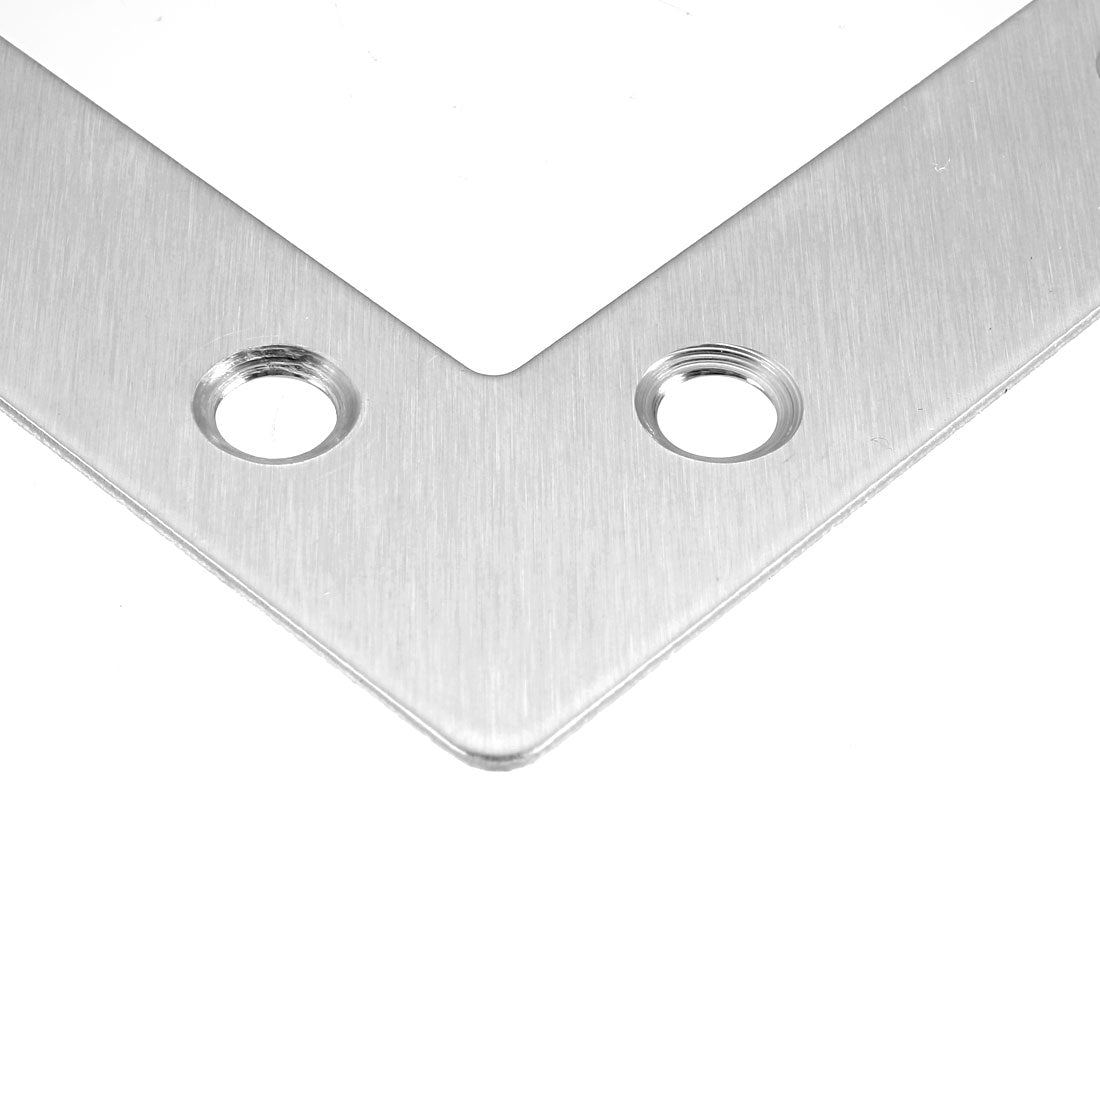 uxcell Uxcell Flat Plate  L Shape, 60mmx60mm, Angle Corner Brace Repair Brackets 10pcs